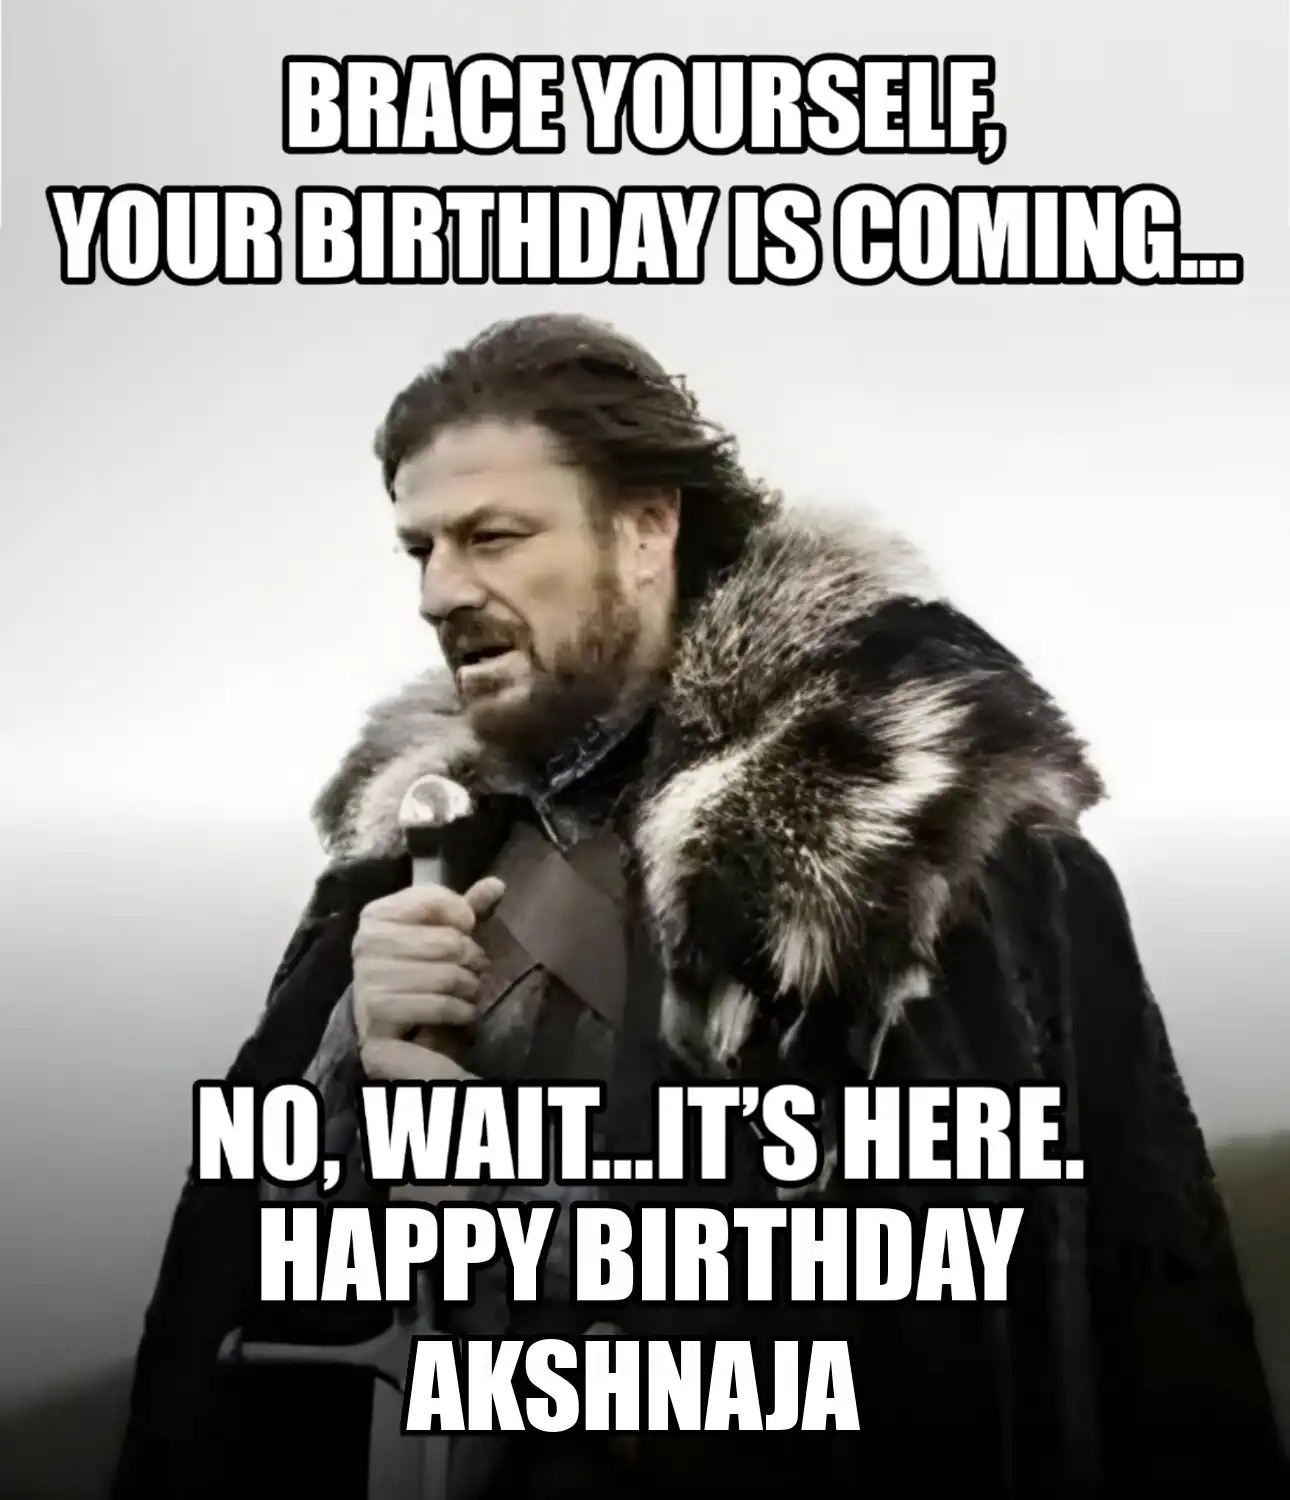 Happy Birthday Akshnaja Brace Yourself Your Birthday Is Coming Meme